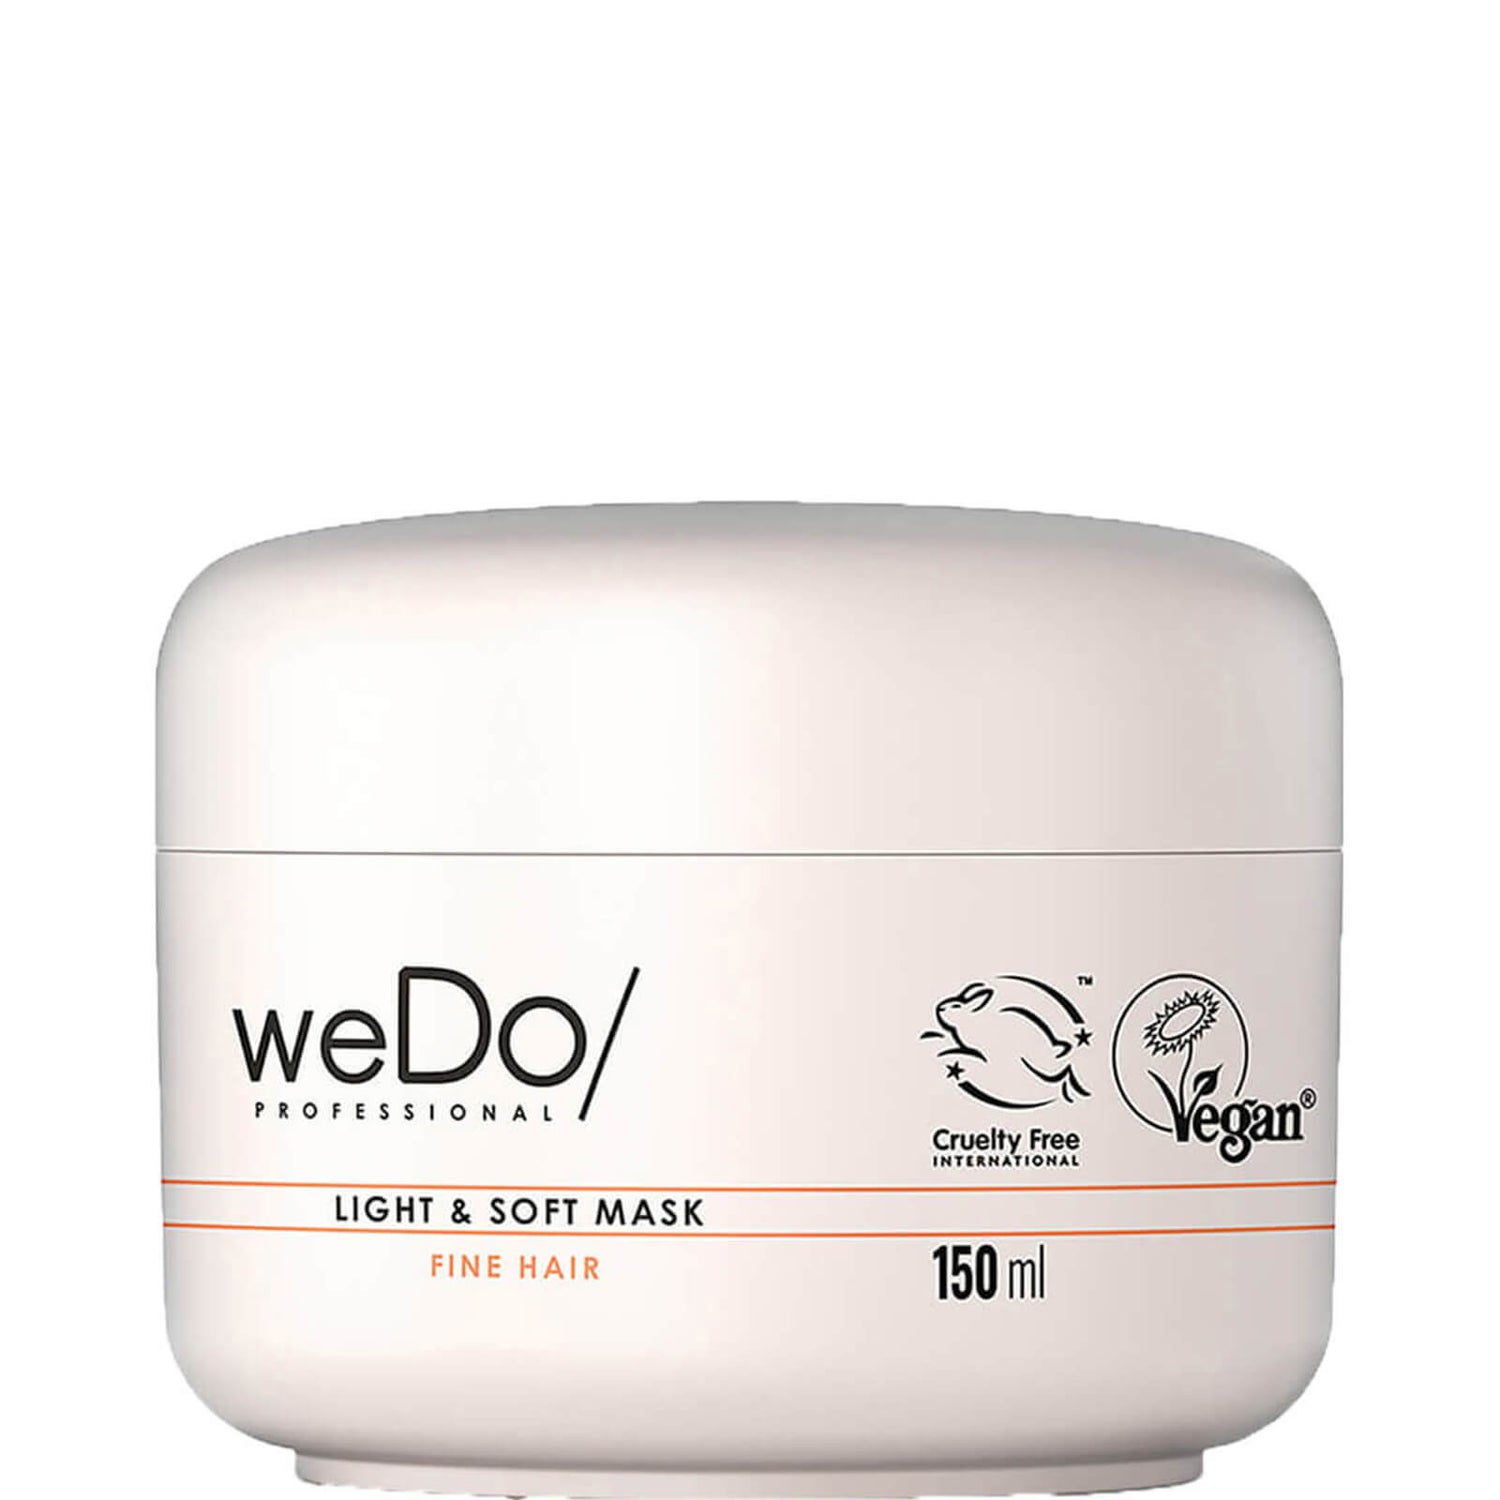 weDo/ Professional Light & Soft Mask 150 ml